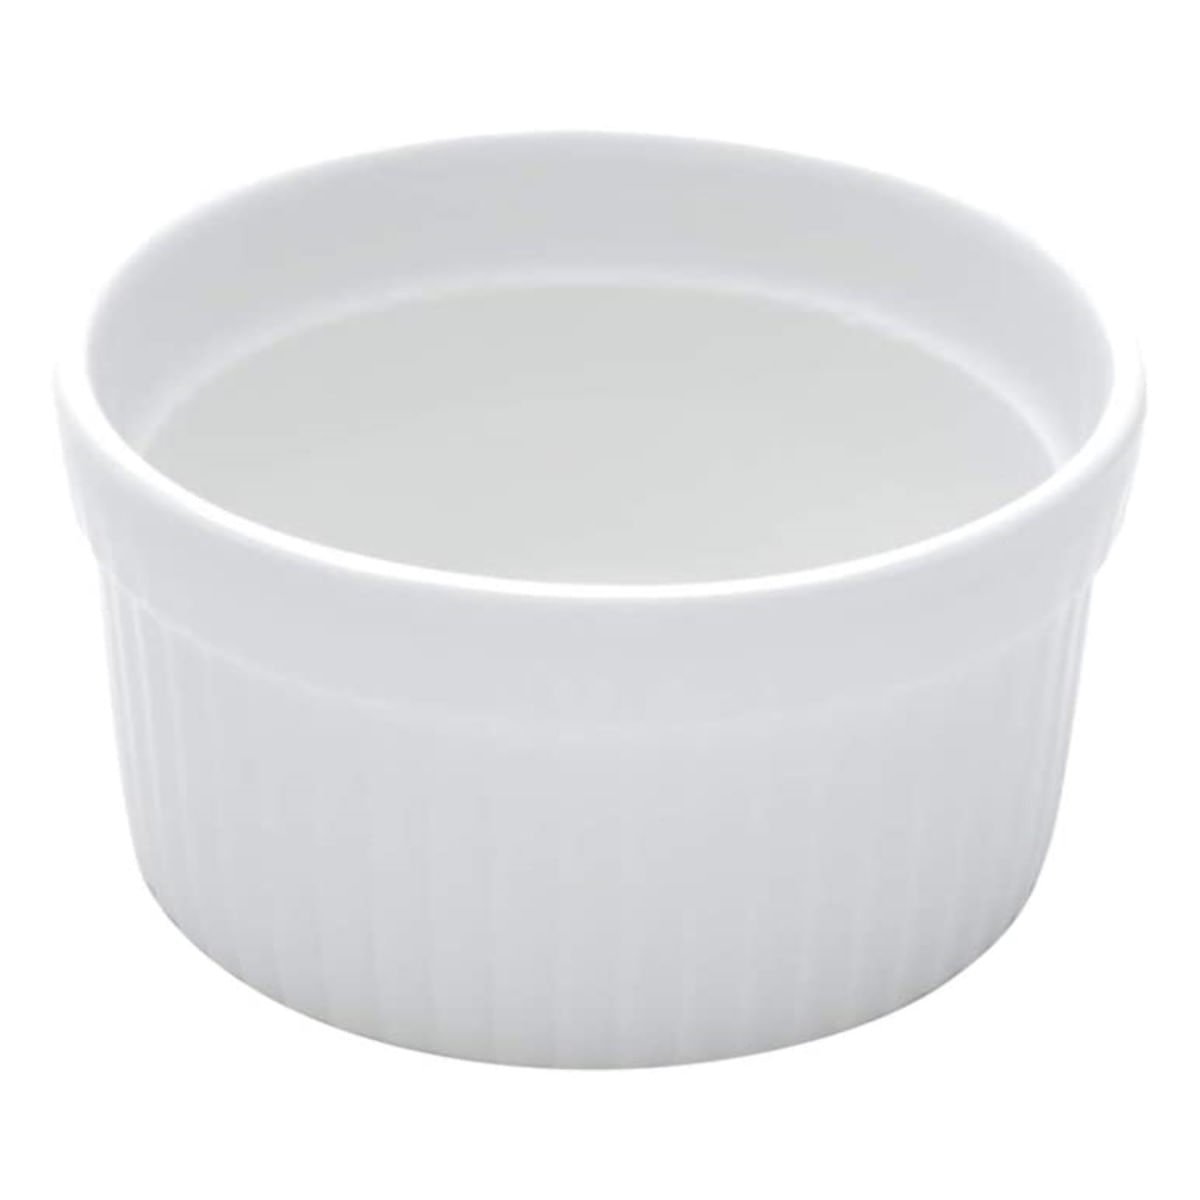 ramequim-de-porcelana-classic-branco-210-ml-lyor-1.jpg